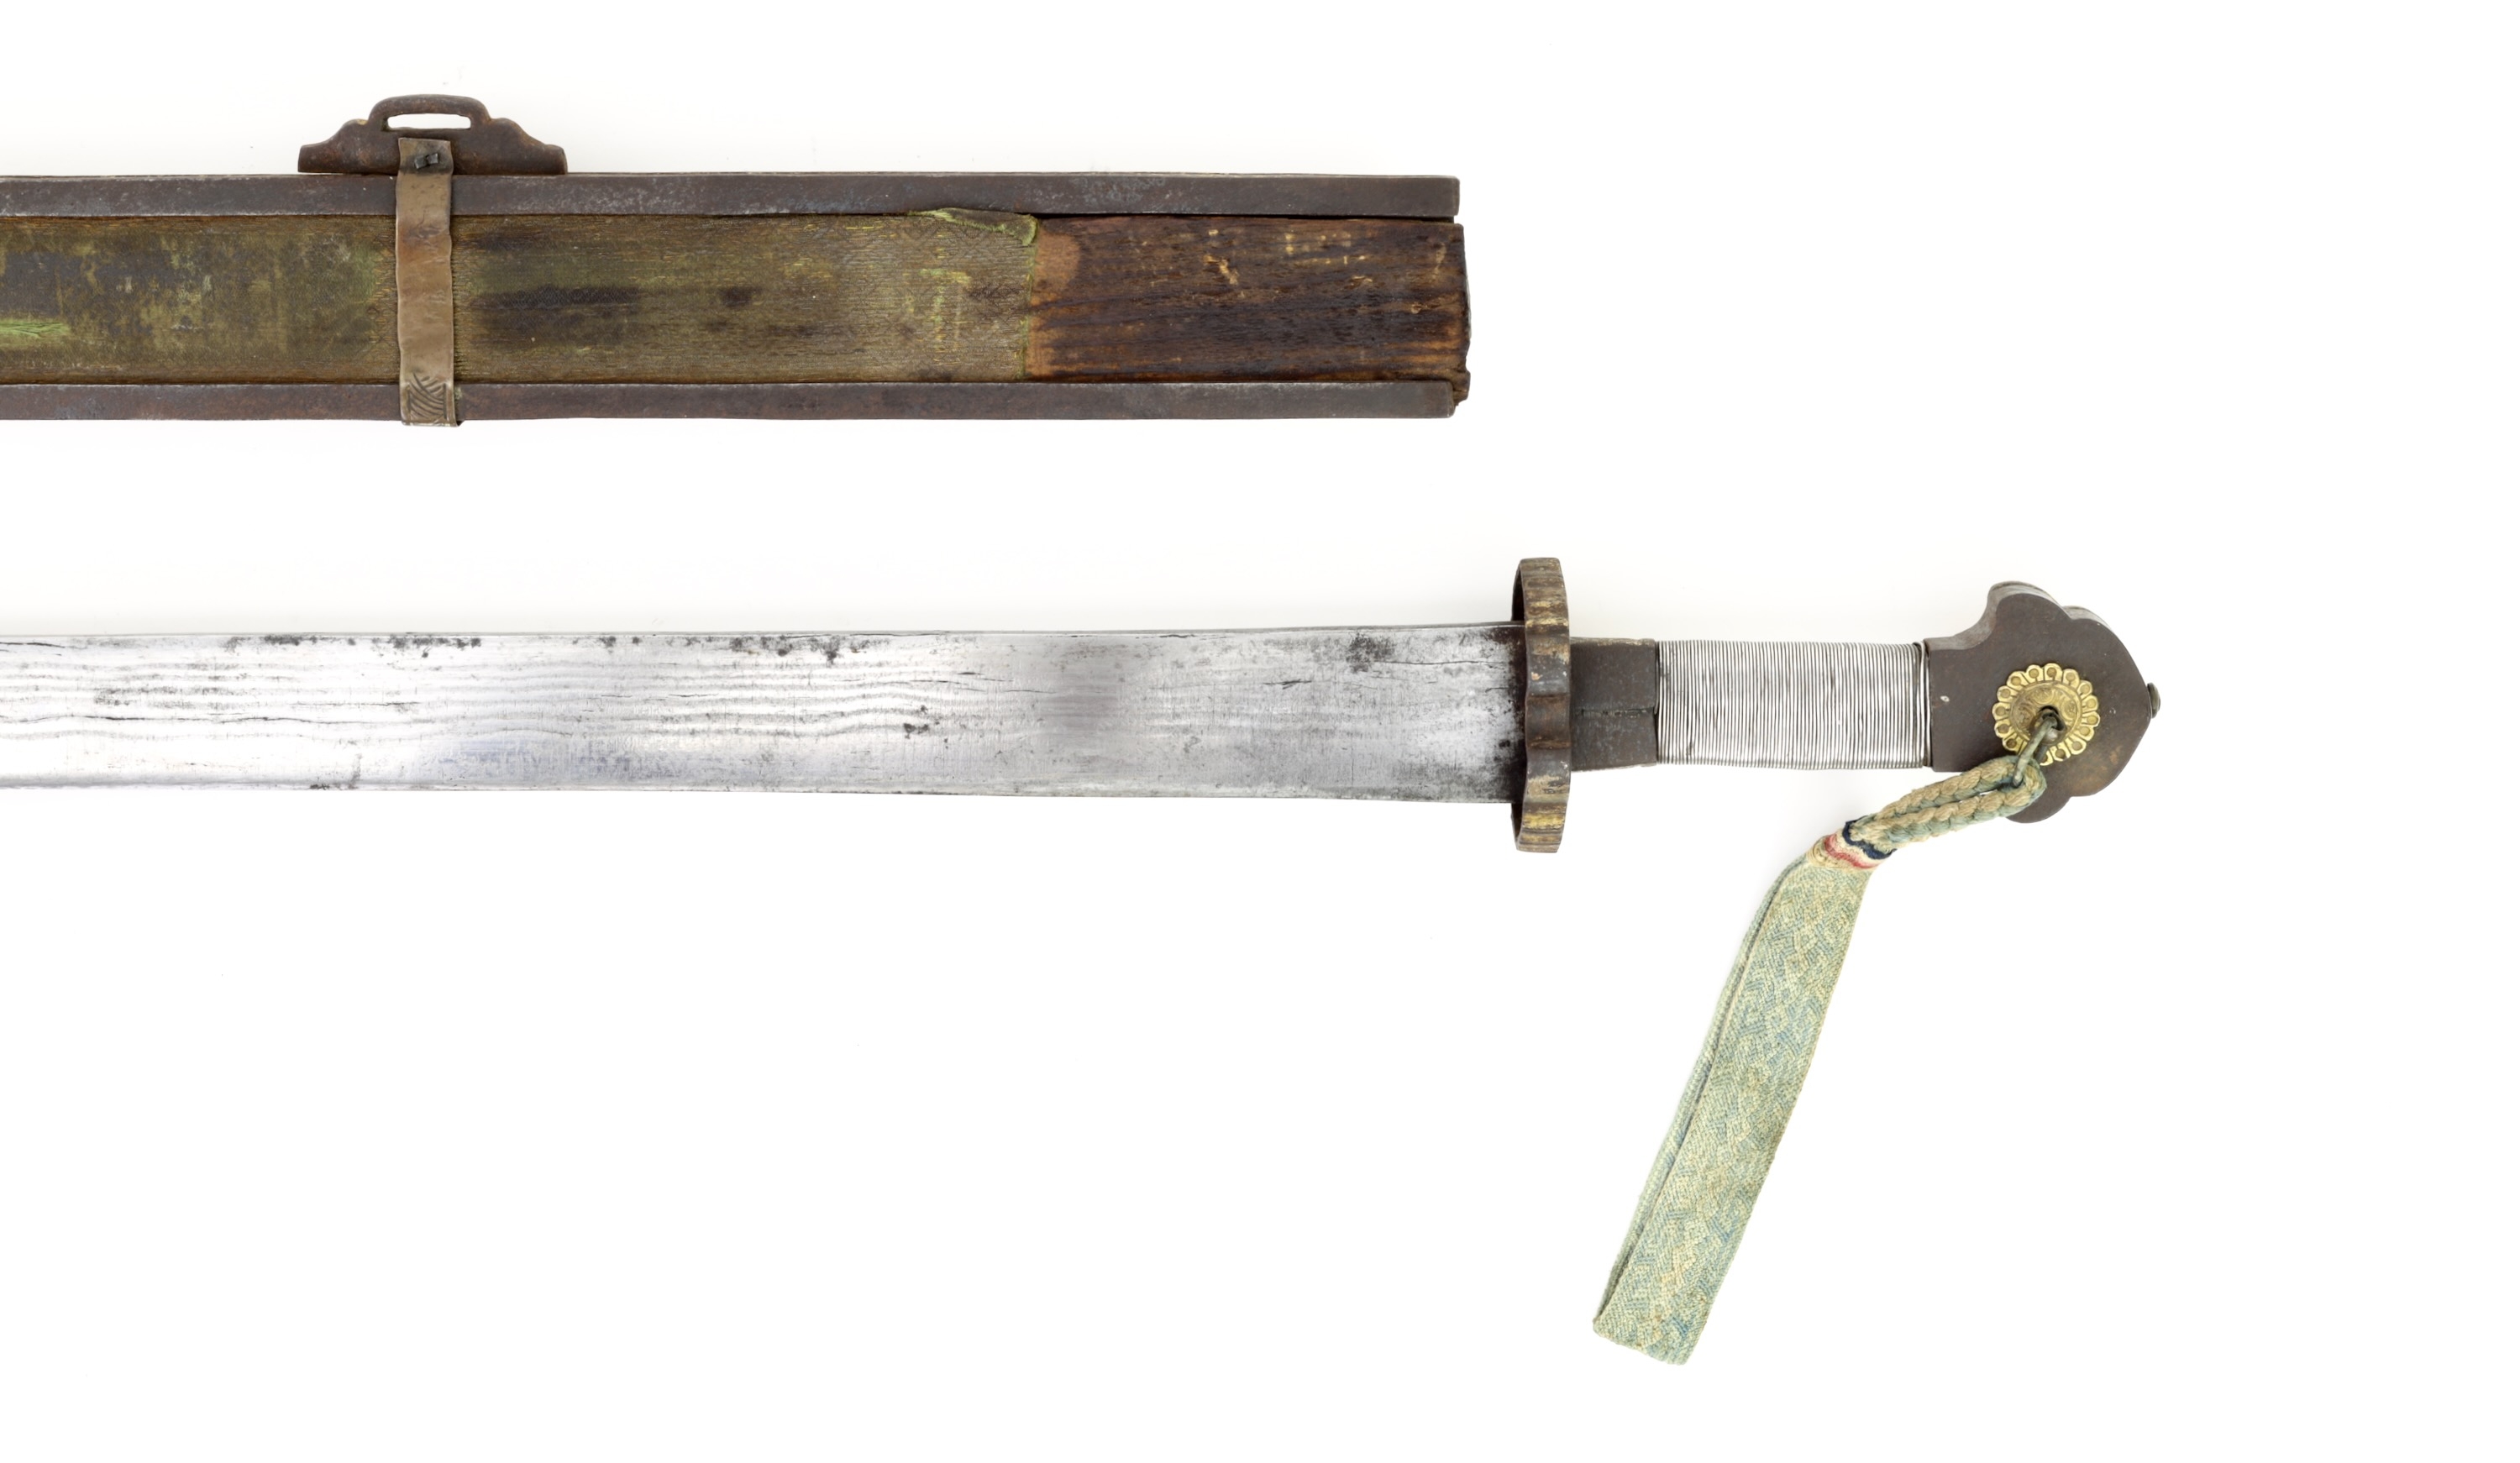 Exceptional tibetan gilt dpa'dam slung sword